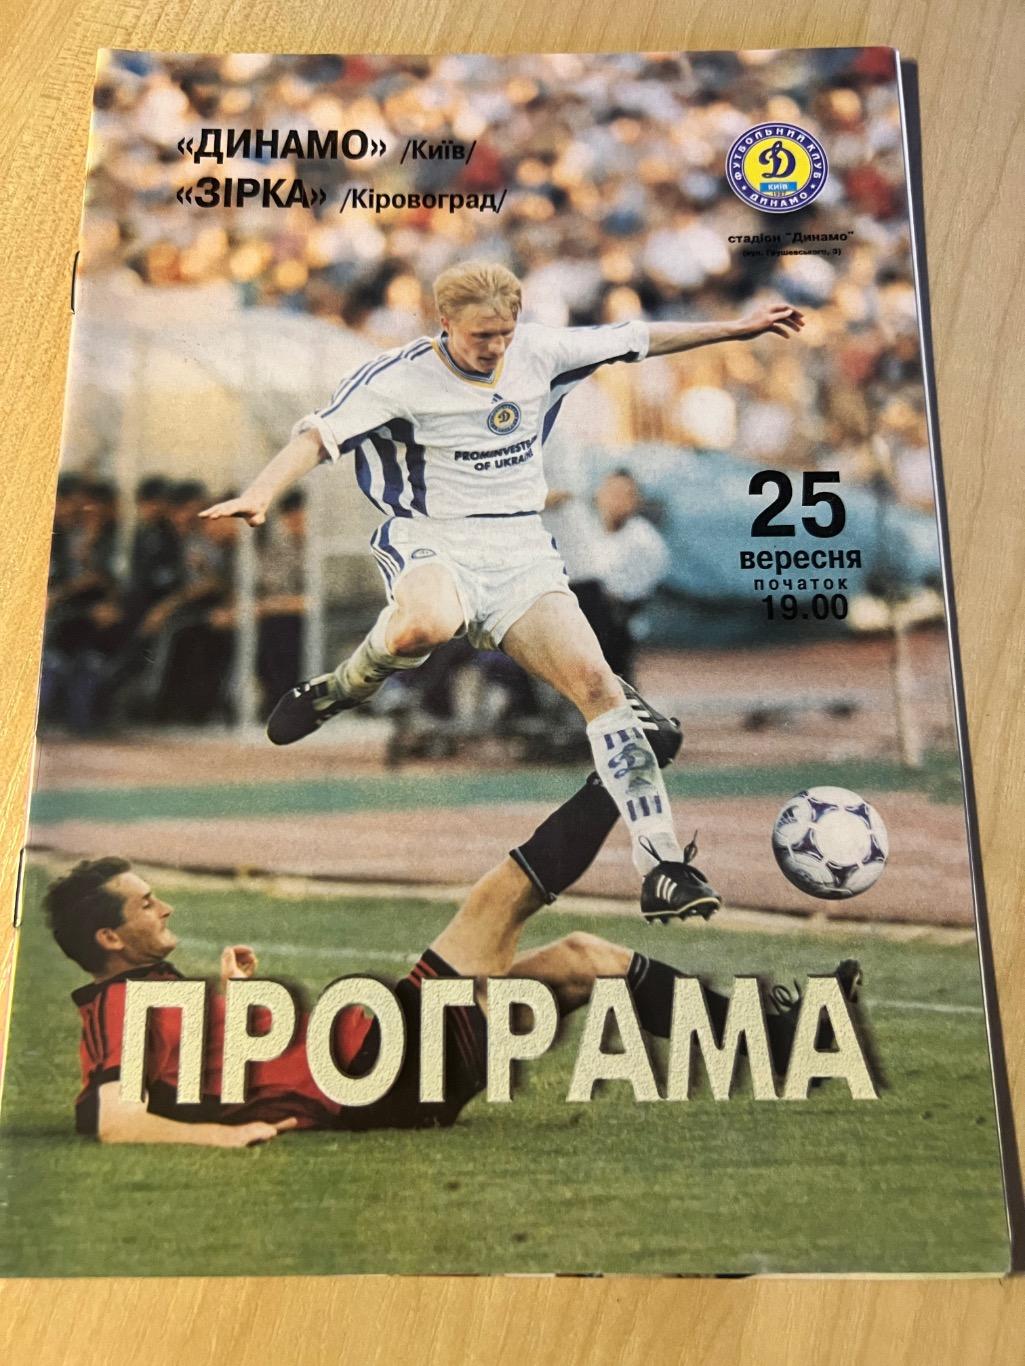 Динамо Киев - Звезда Кировоград 1999-2000